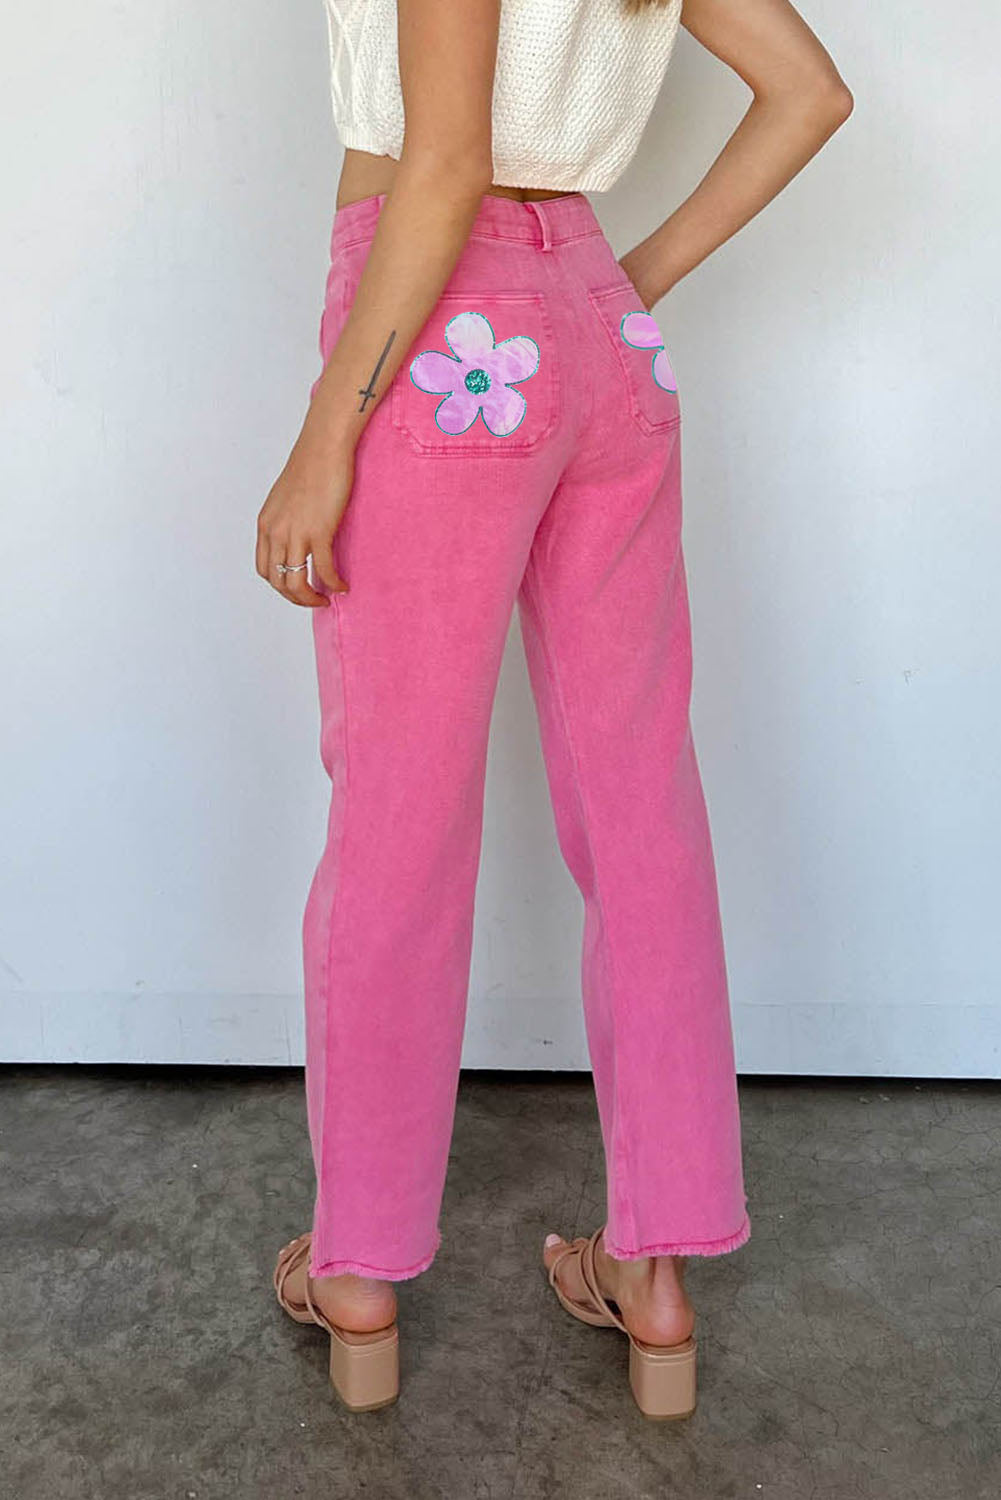 Pink Flower Patterns Raw Hem Flare Jeans Graphic Pants JT's Designer Fashion